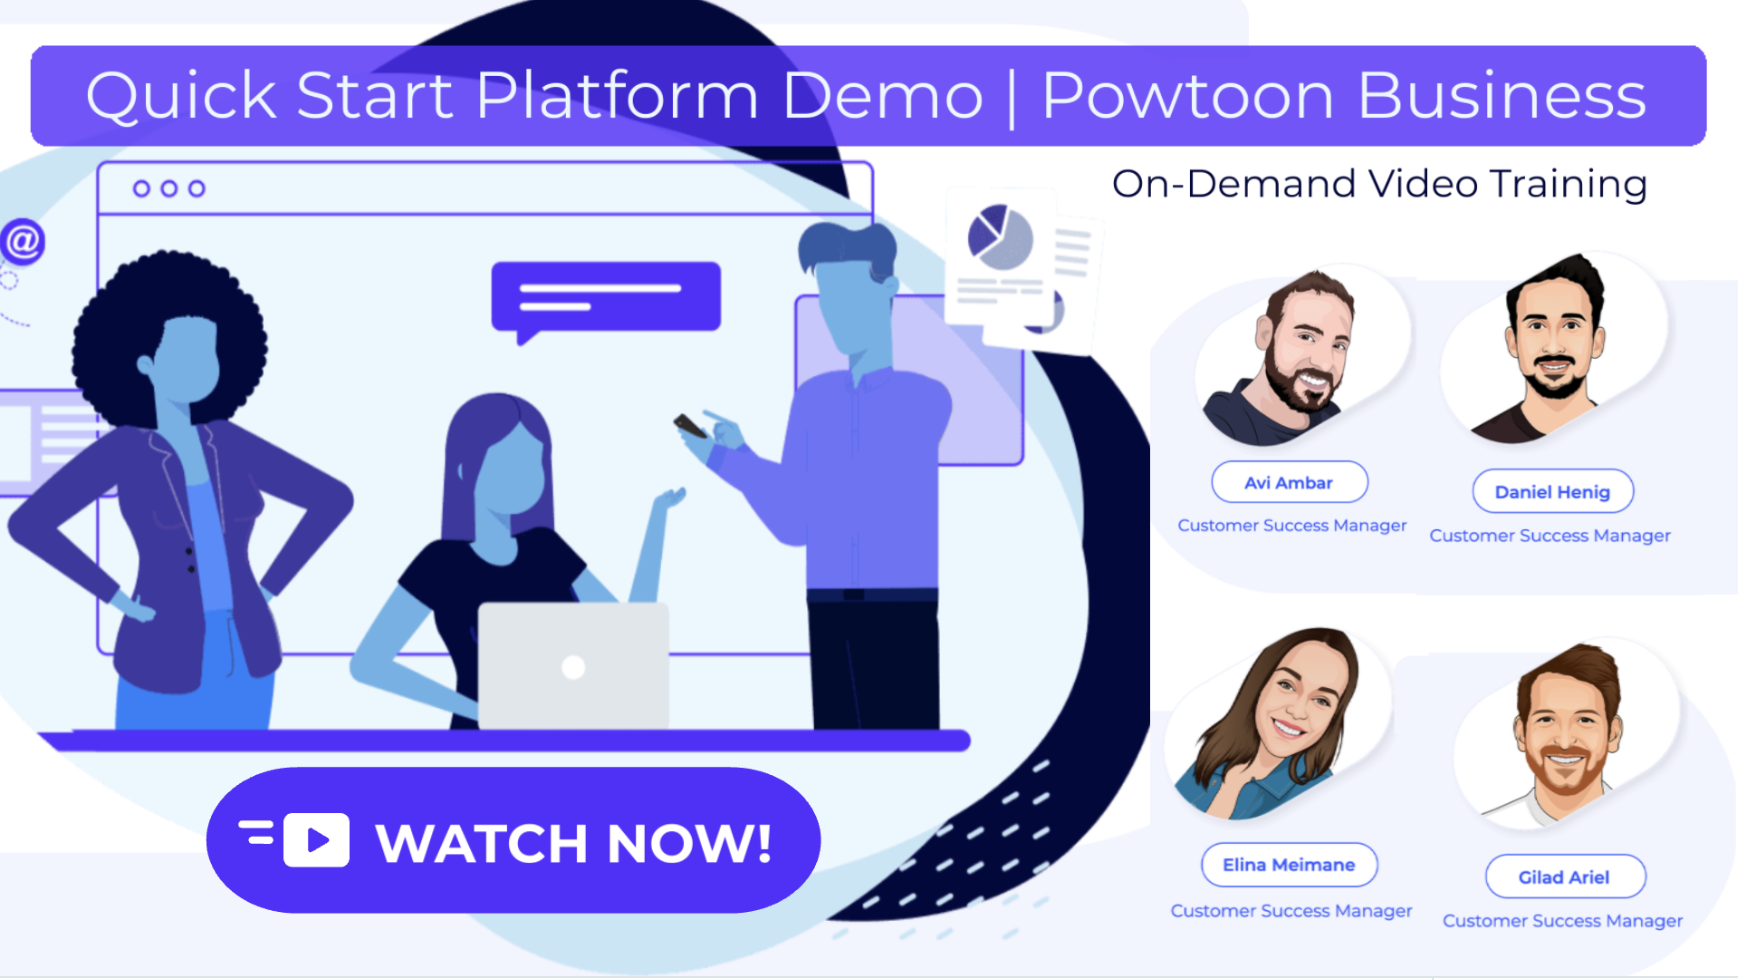 Powtoon Business Quick Start Platform Demo